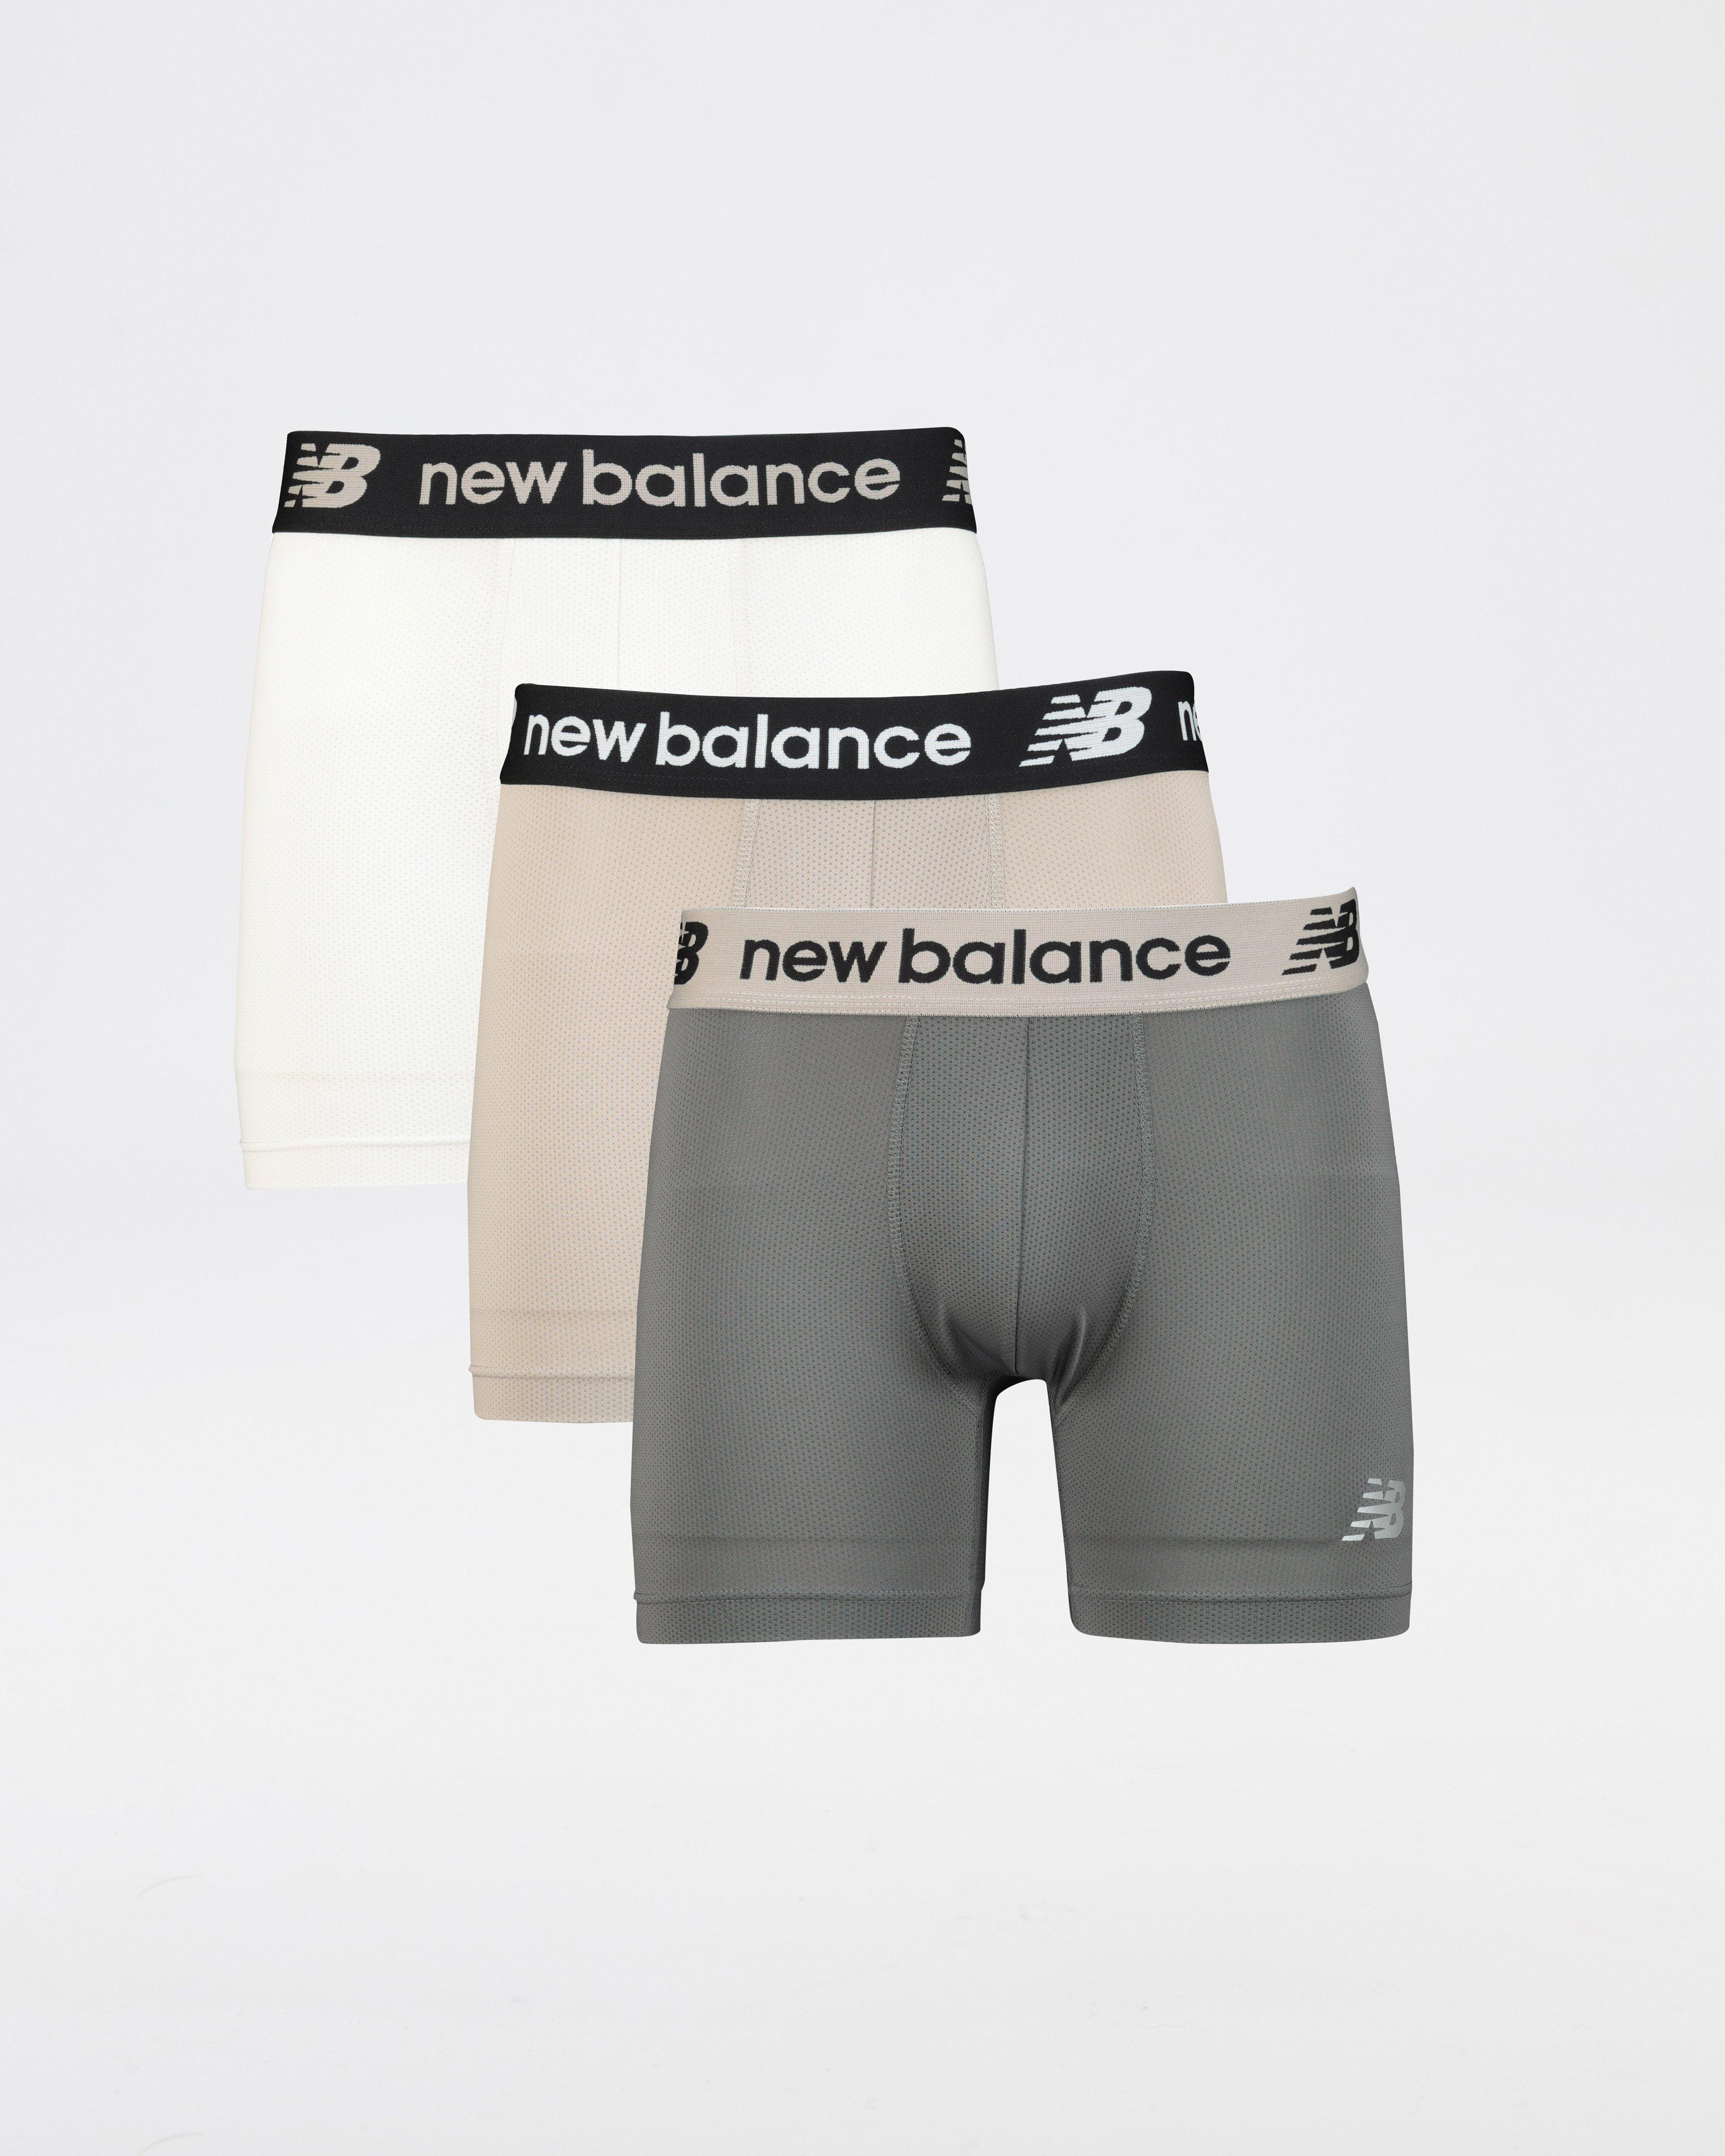 NEW BALANCE Mens Premium Performance Boxer Brief XL Grey